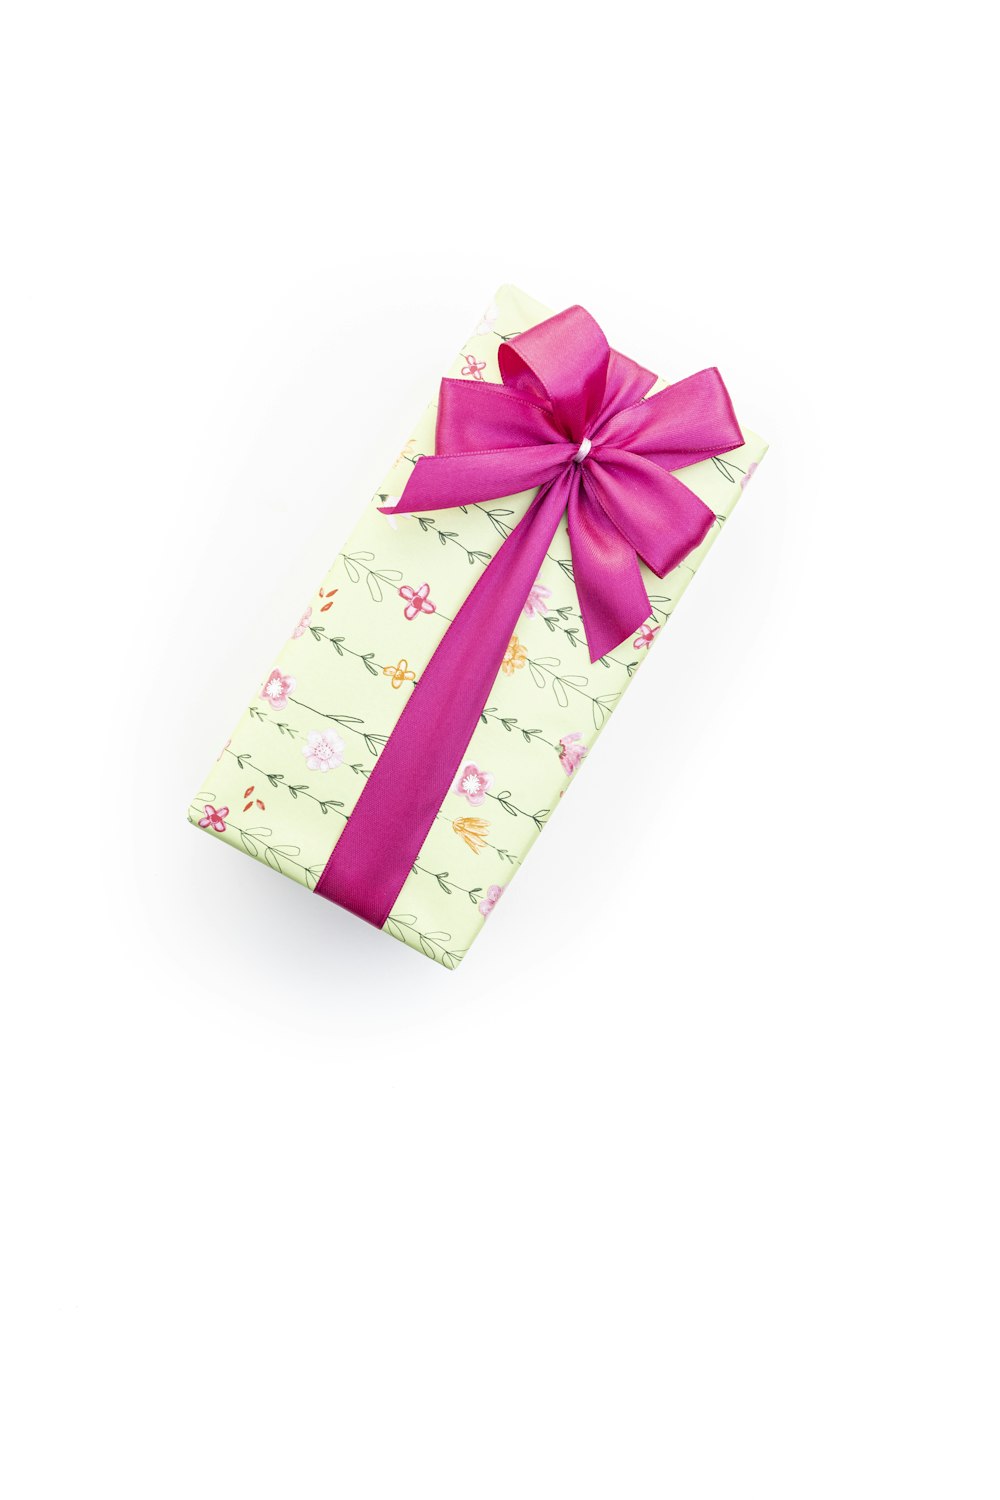 pink and white polka dot gift box with pink ribbon